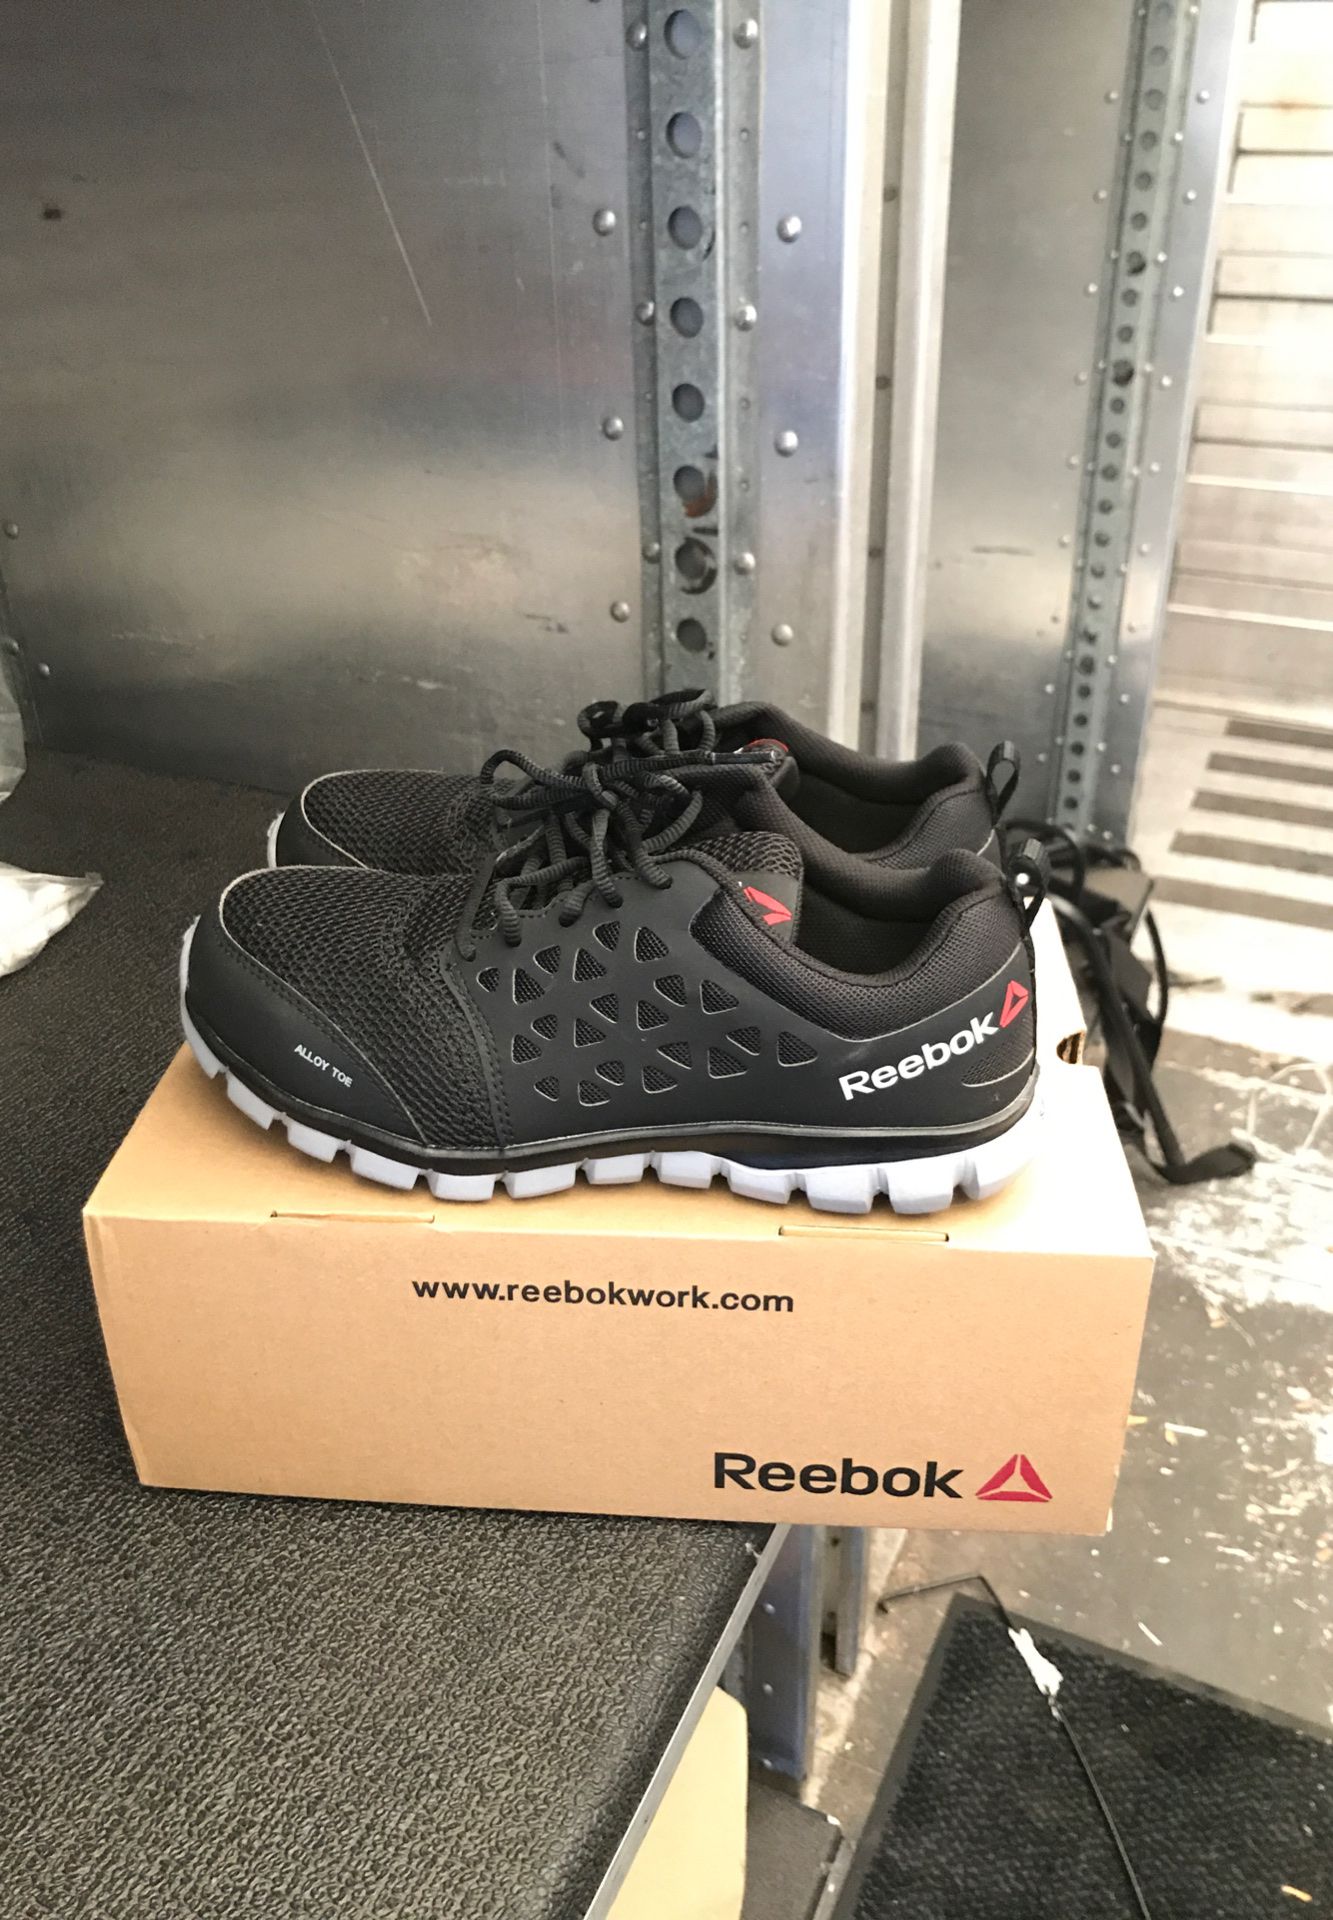 Reebok work shoes